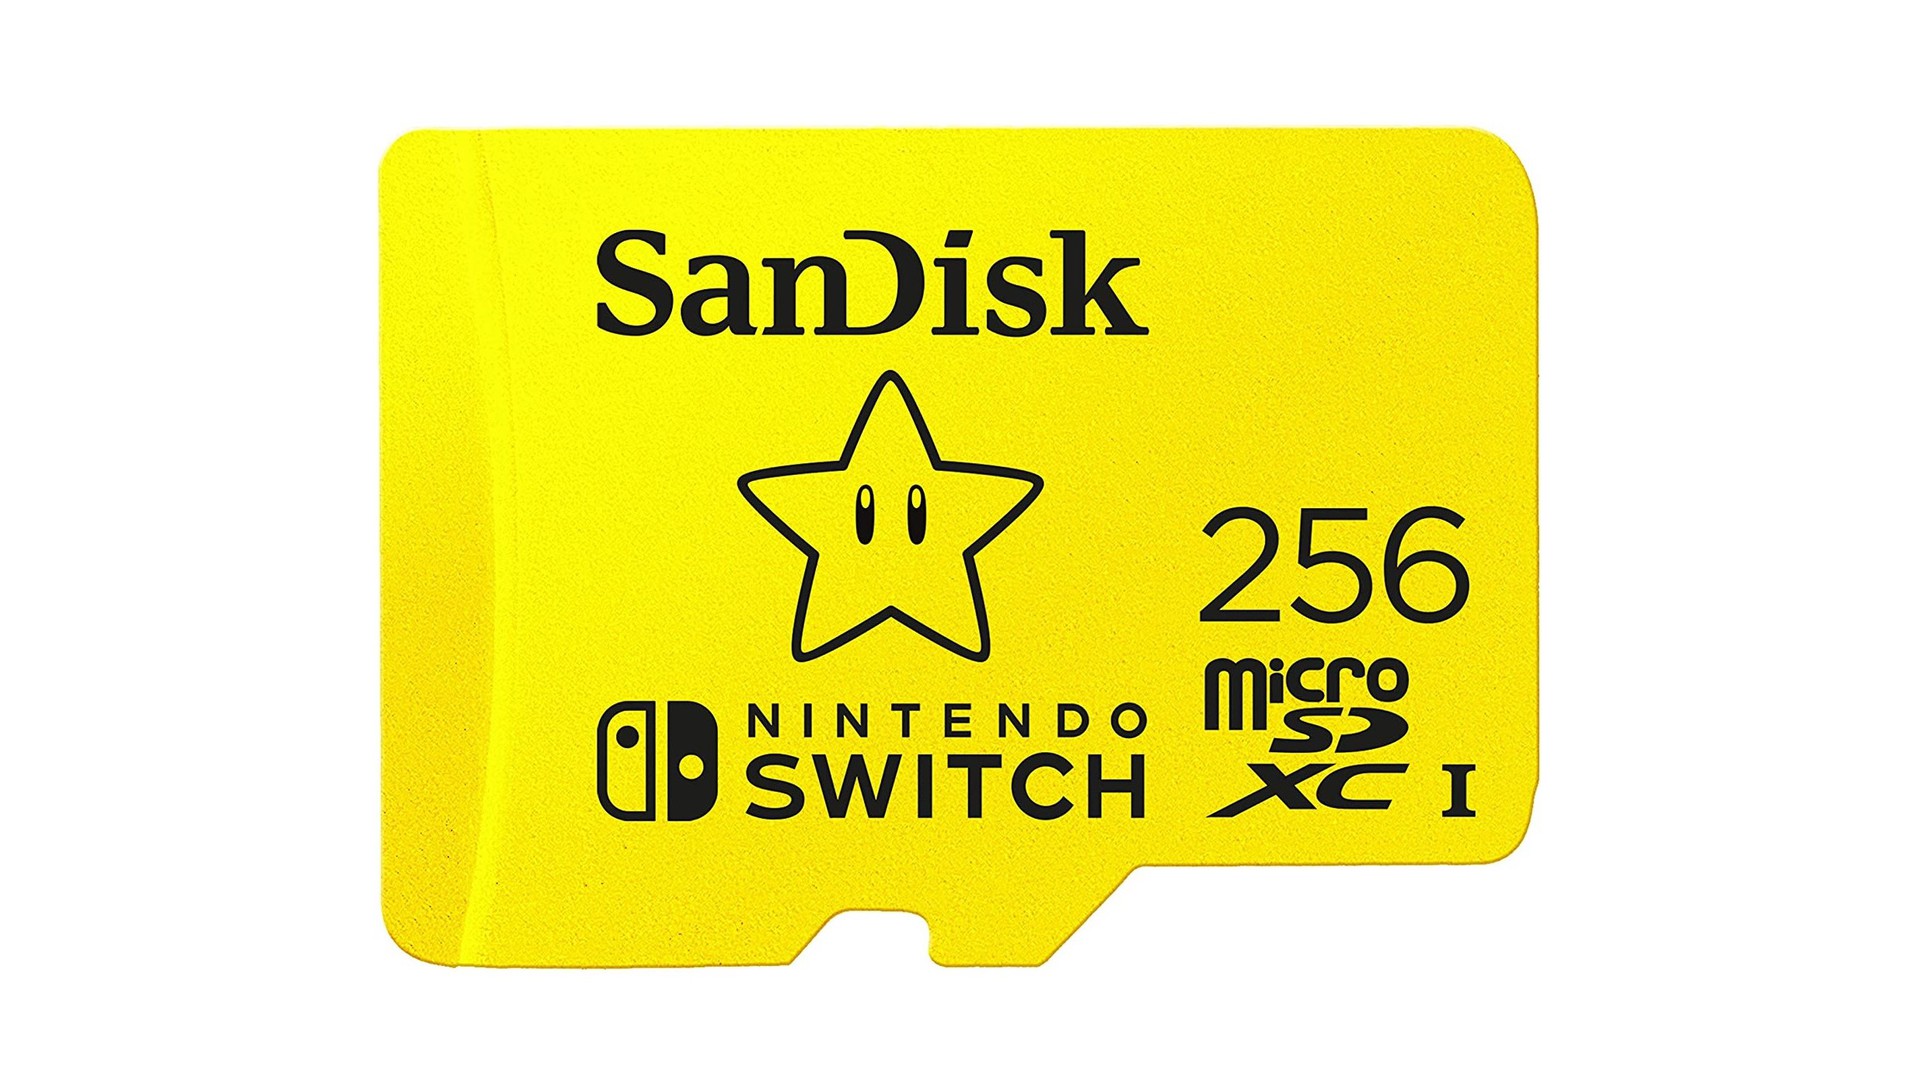 Sandisk for Nintendo Switch